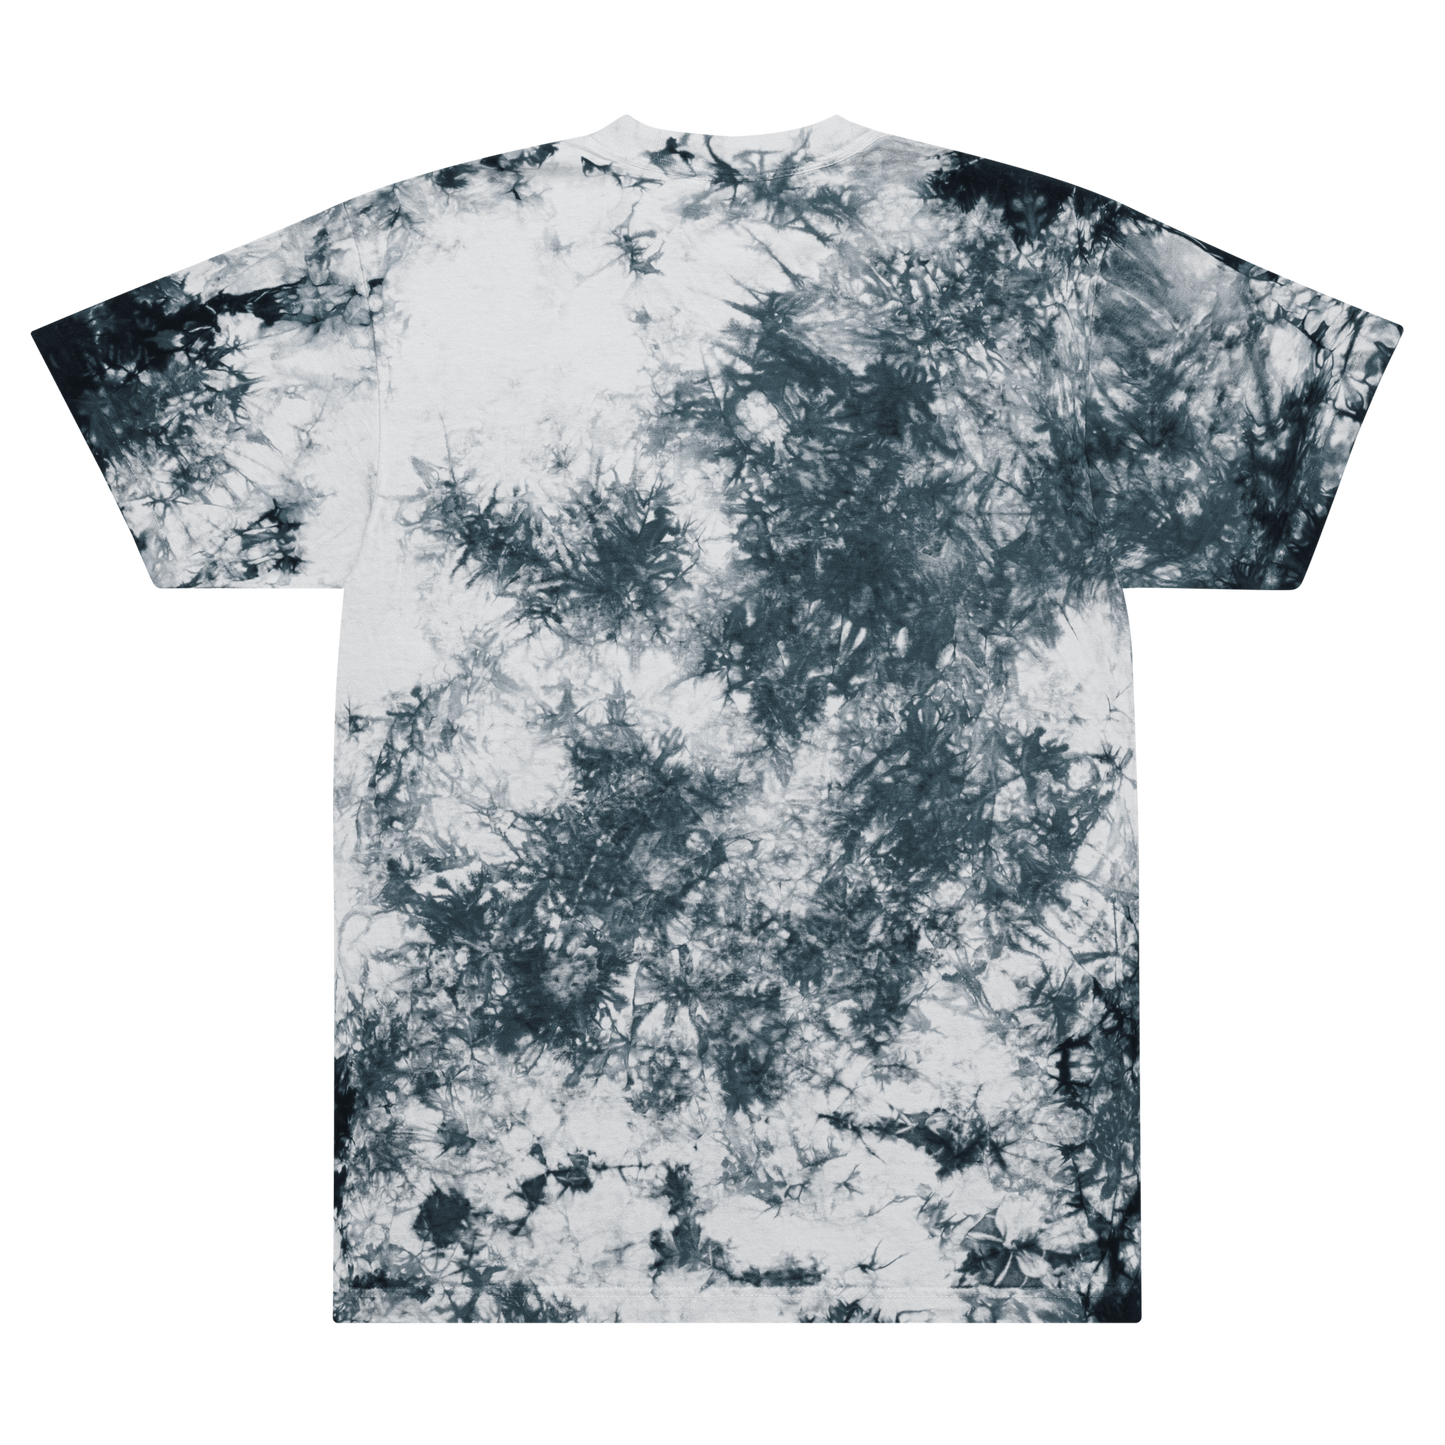 Starlife Black/White Marble Tye Dye T-Shirt